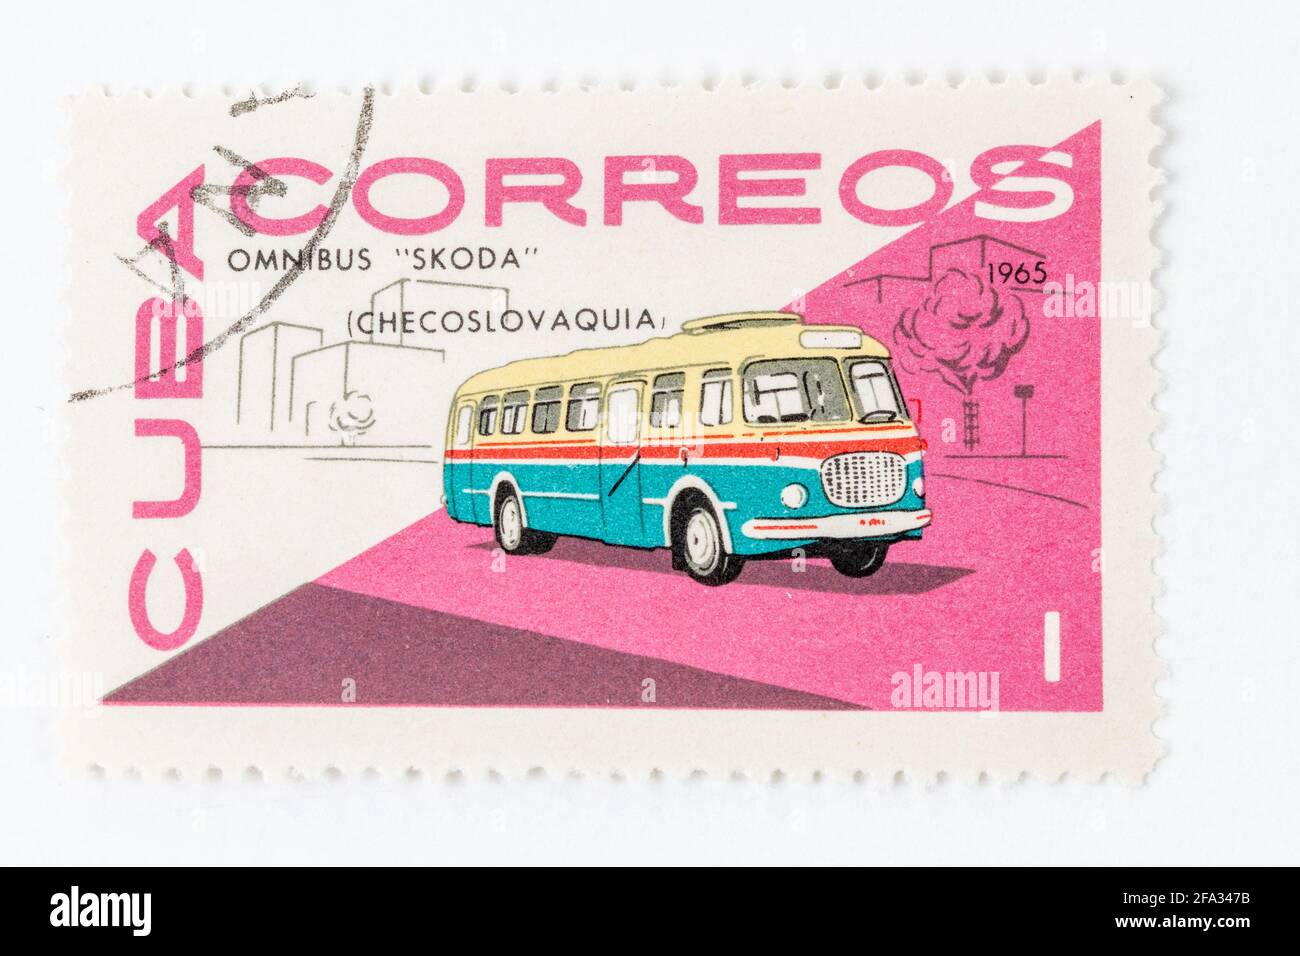 'Cuba Correos' antique stamp based on the theme transportation. Skoda bus from Czechoslovakia Stock Photo